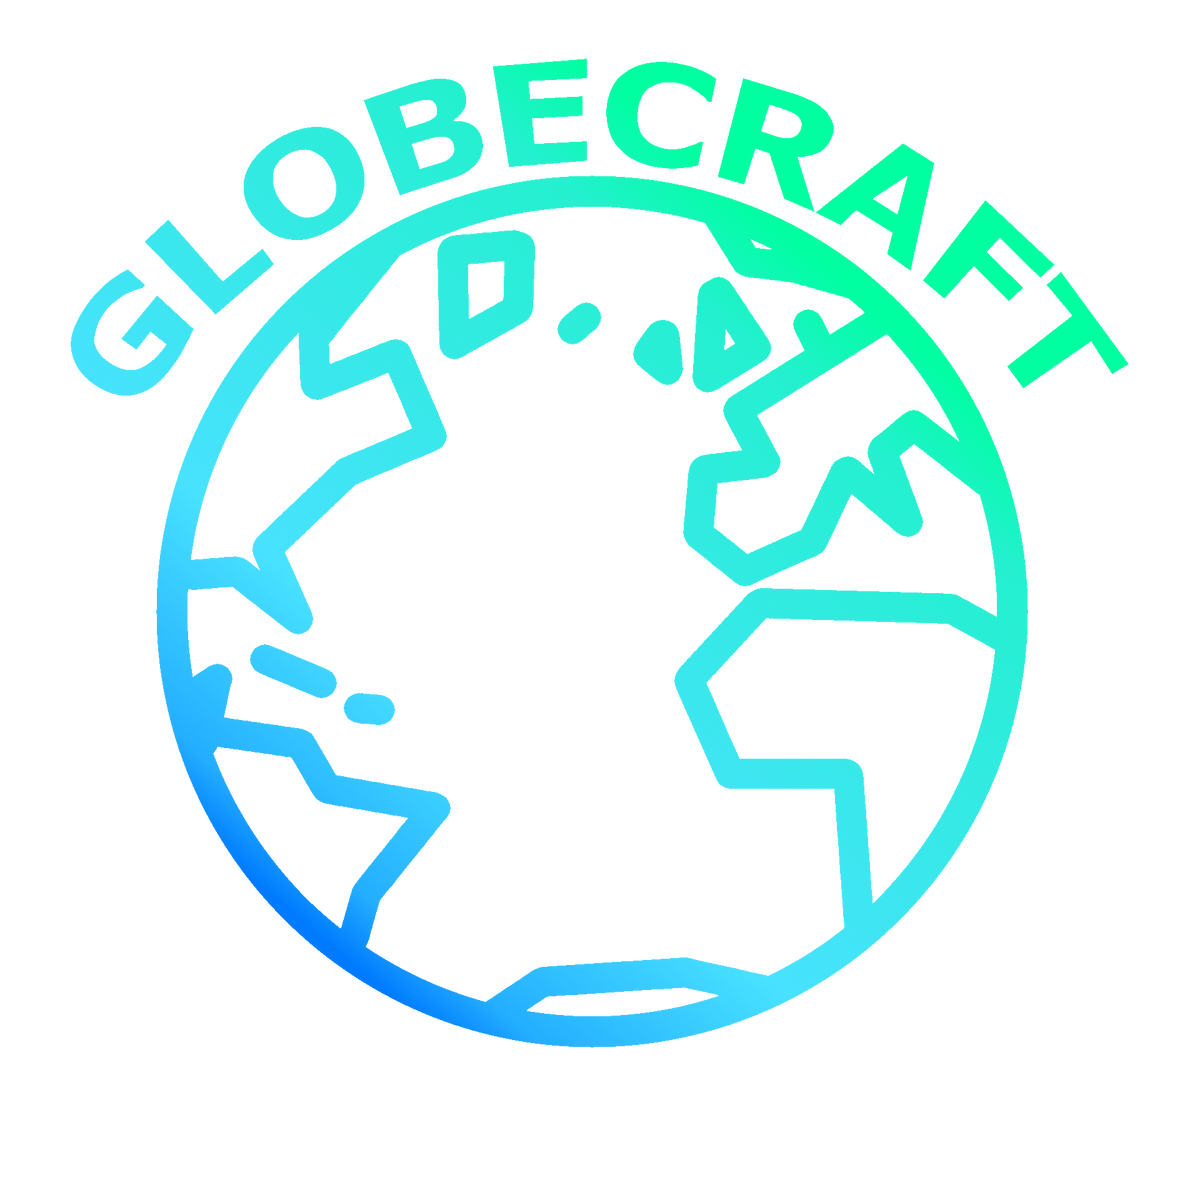 Earth World III, Globecraft Wiki